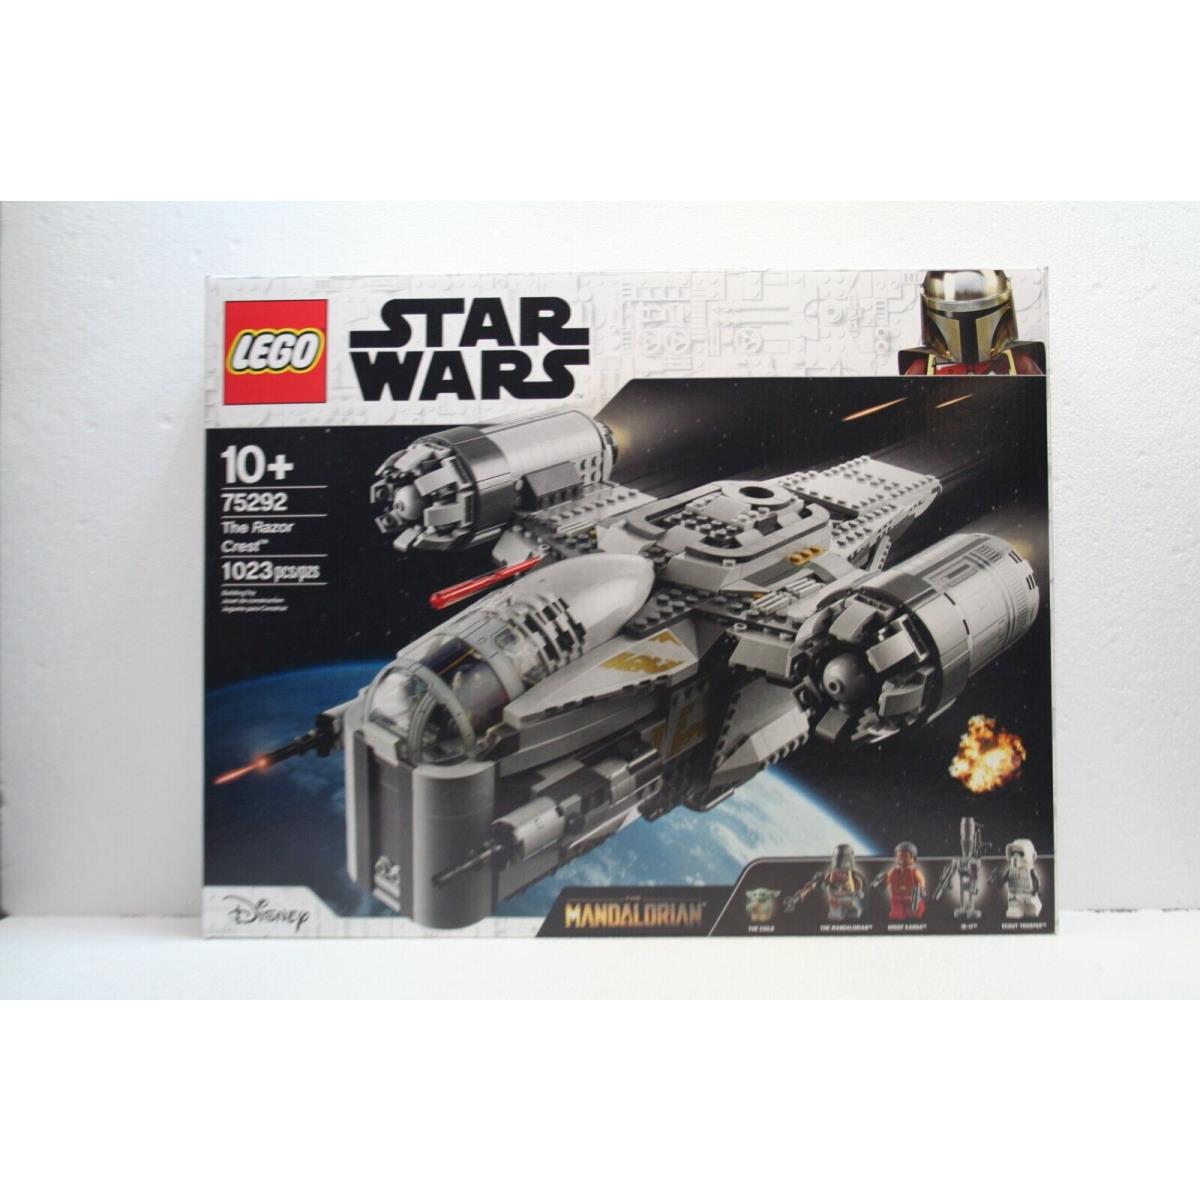 Star Wars Lego 75292 The Razor Crest